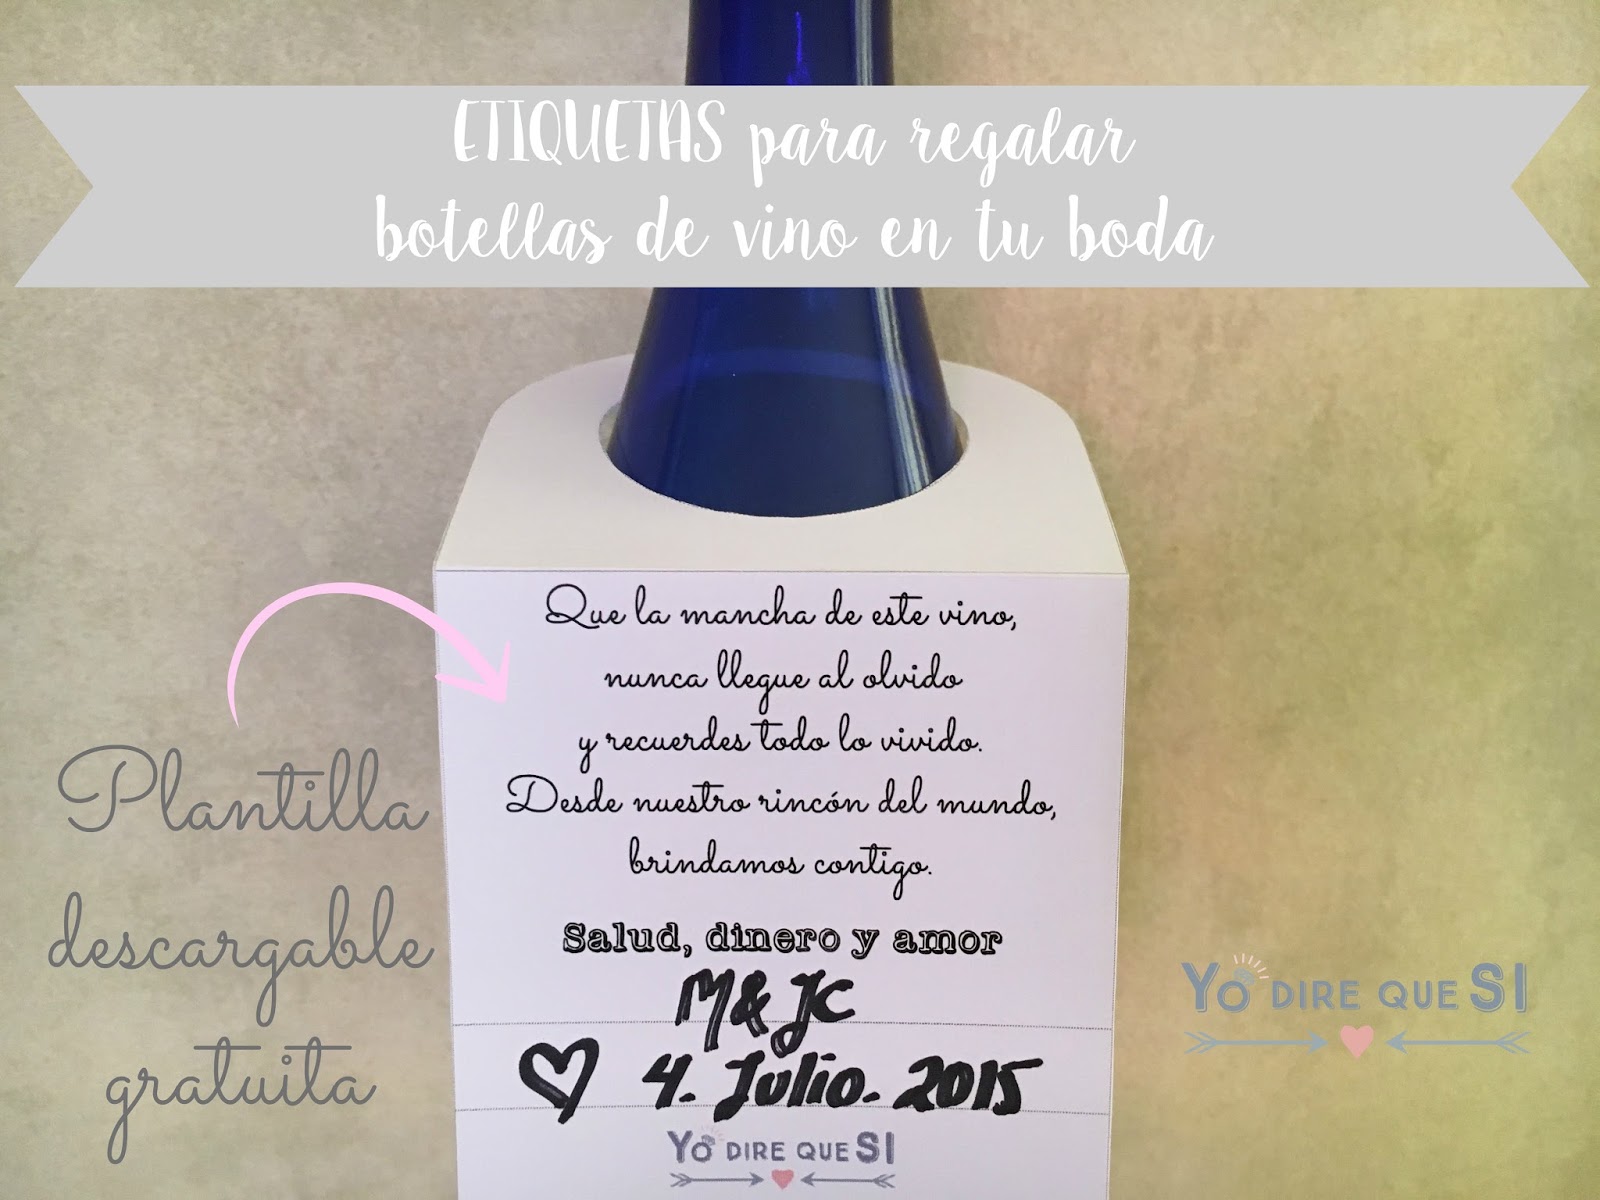 Blog de bodas - Yo dire que si: Etiquetas personalizadas para regalar botellas vino en boda. descargable gratuita.